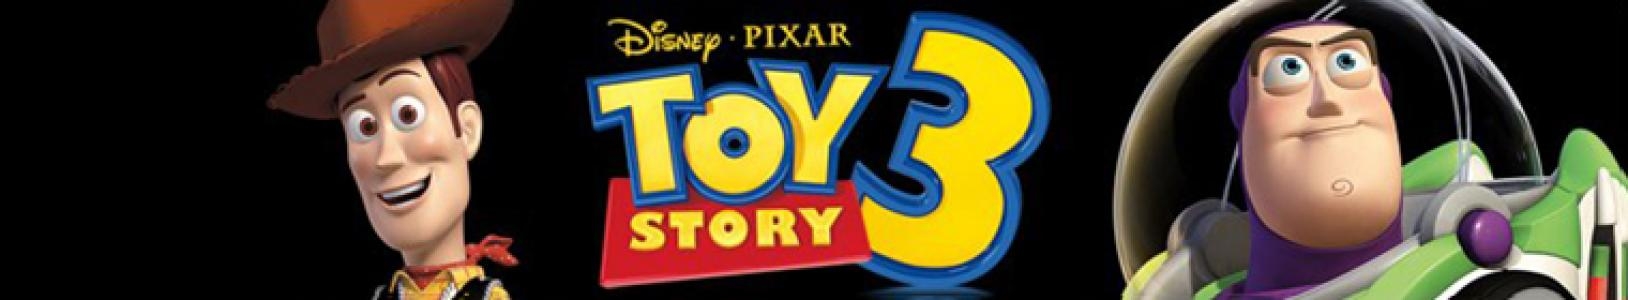 Disney/Pixar Toy Story 3 banner